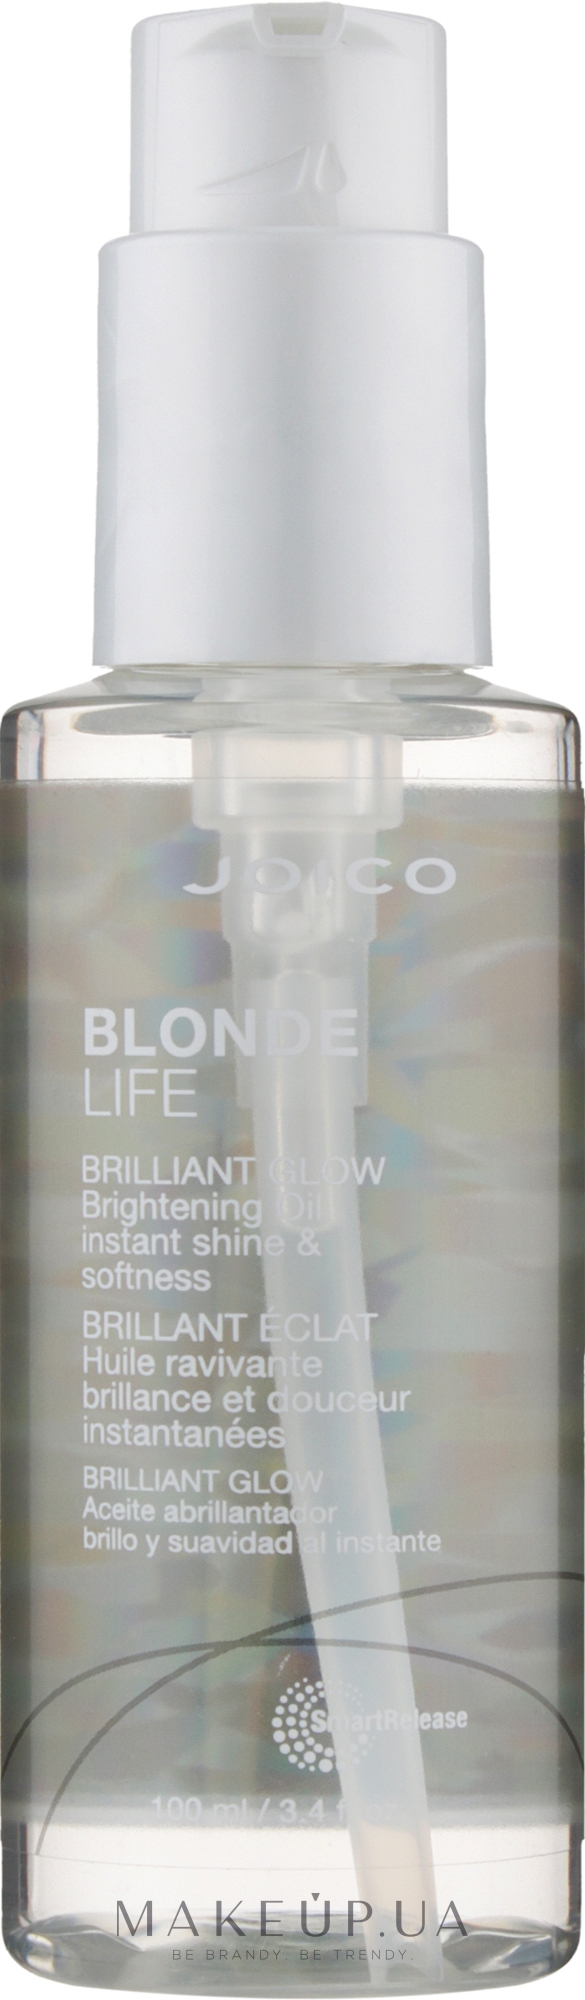 Масло для бриллиантового блеска - SR Blonde Life Brilliant Glow Oil  — фото 100ml